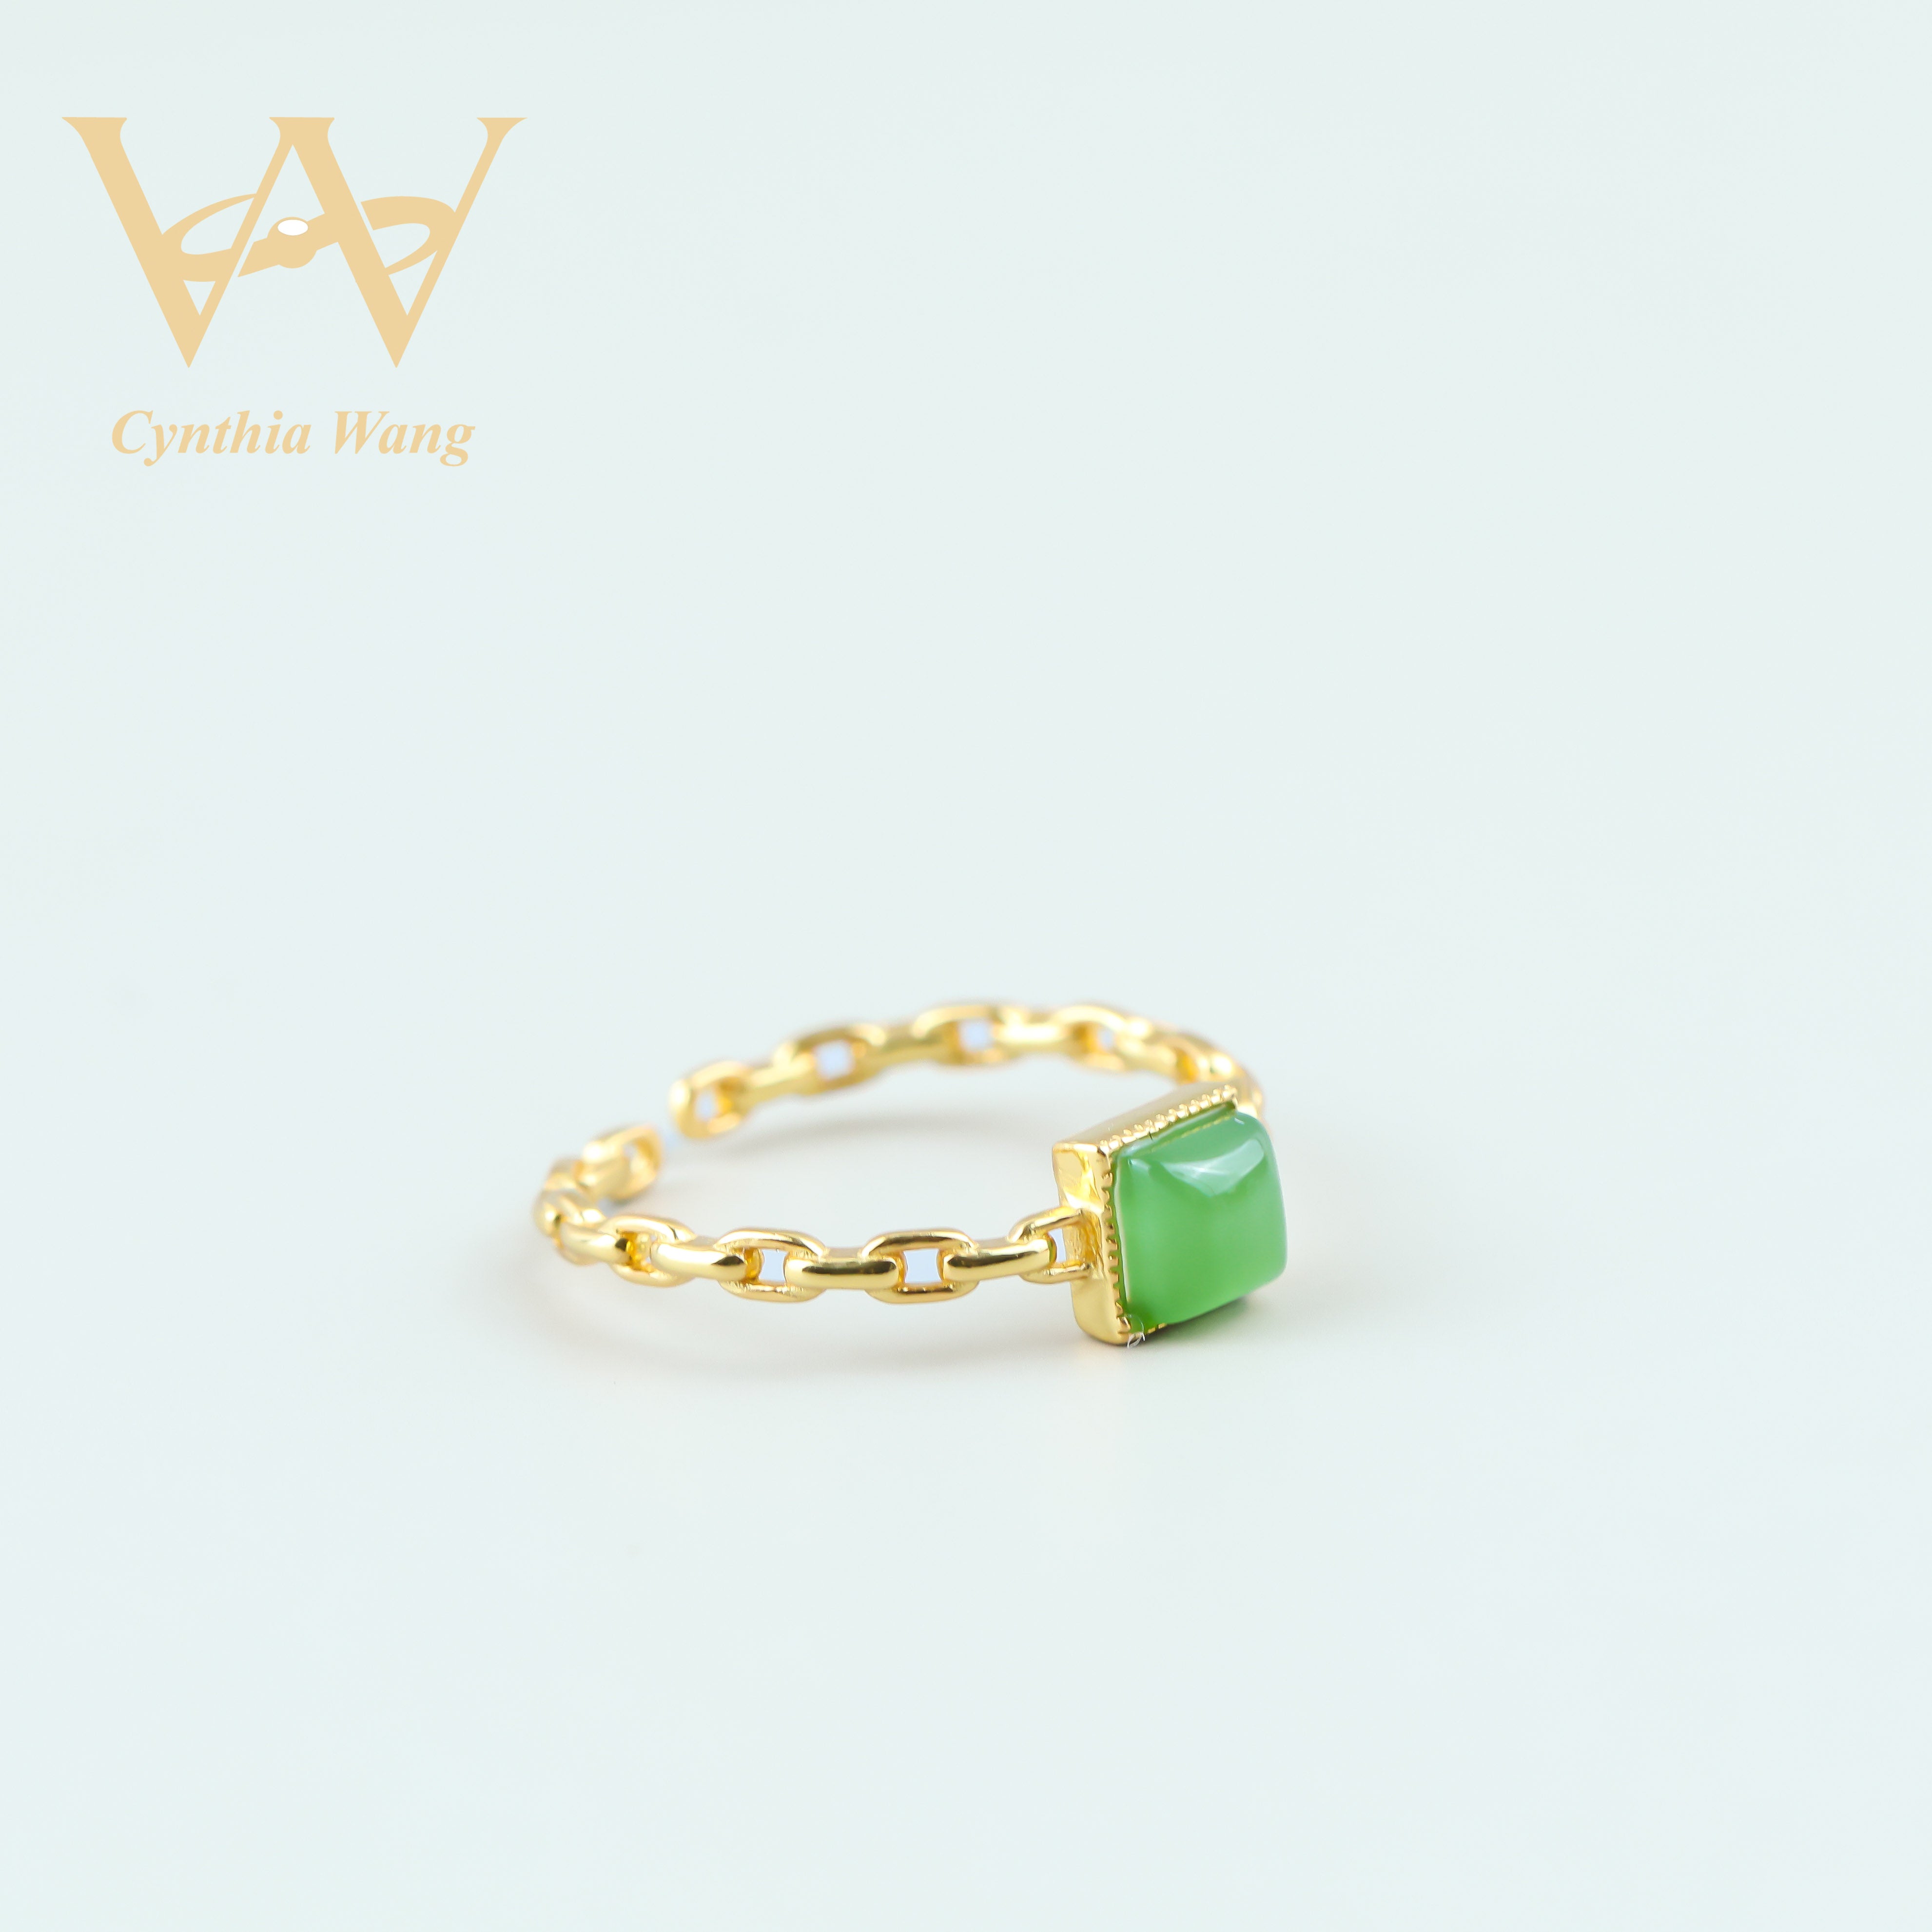 'Celestial Beauty' Hetian Jade Jewelry Set